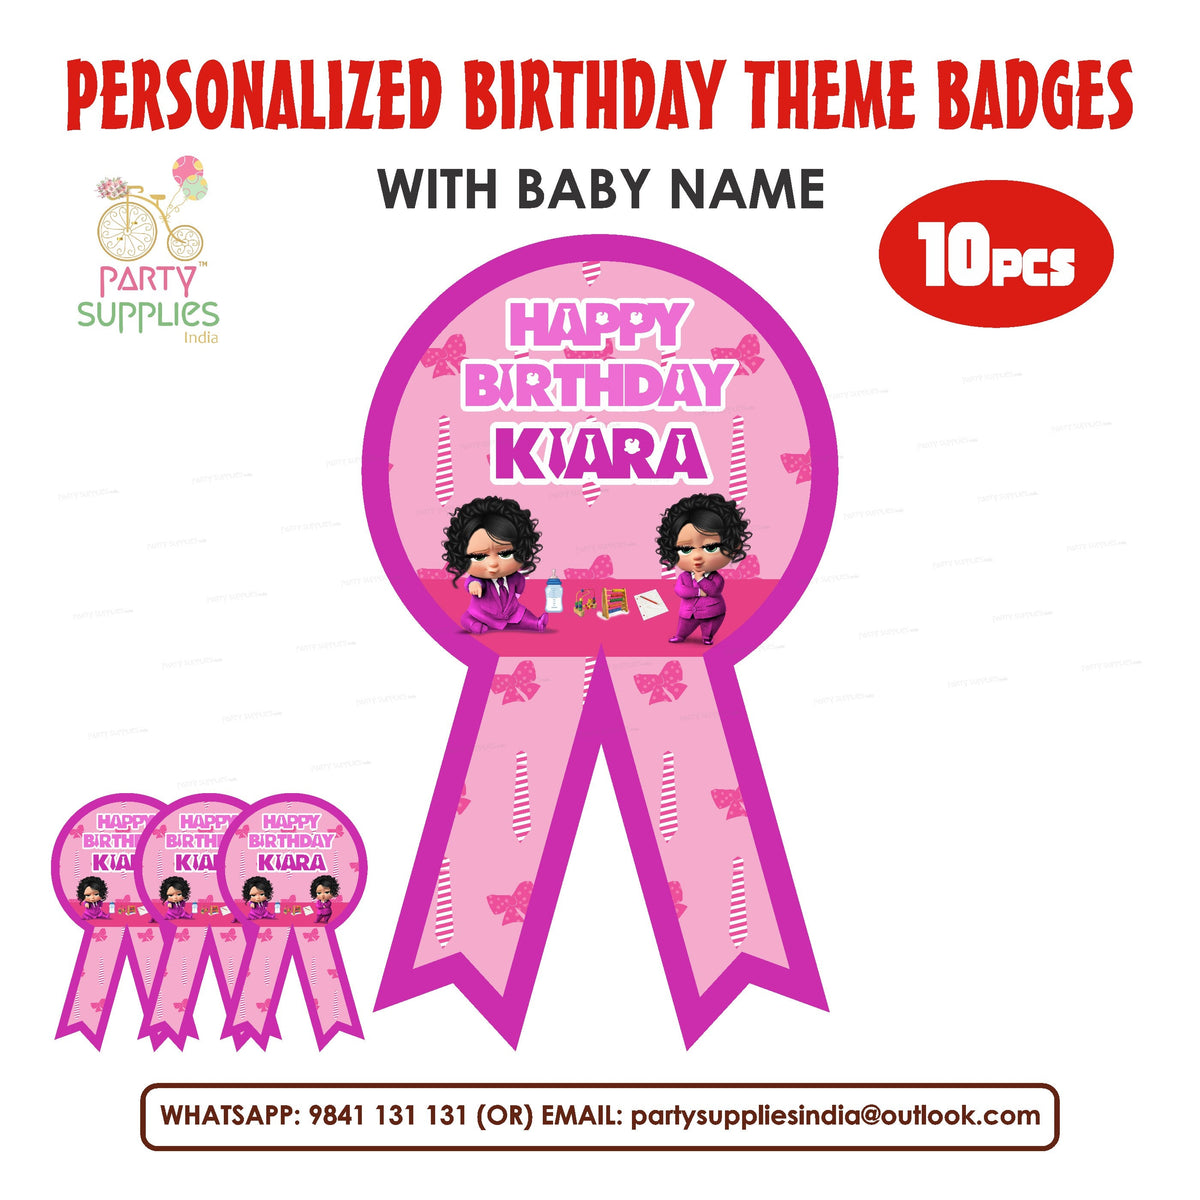 PSI Girl Boss Baby Theme Badges